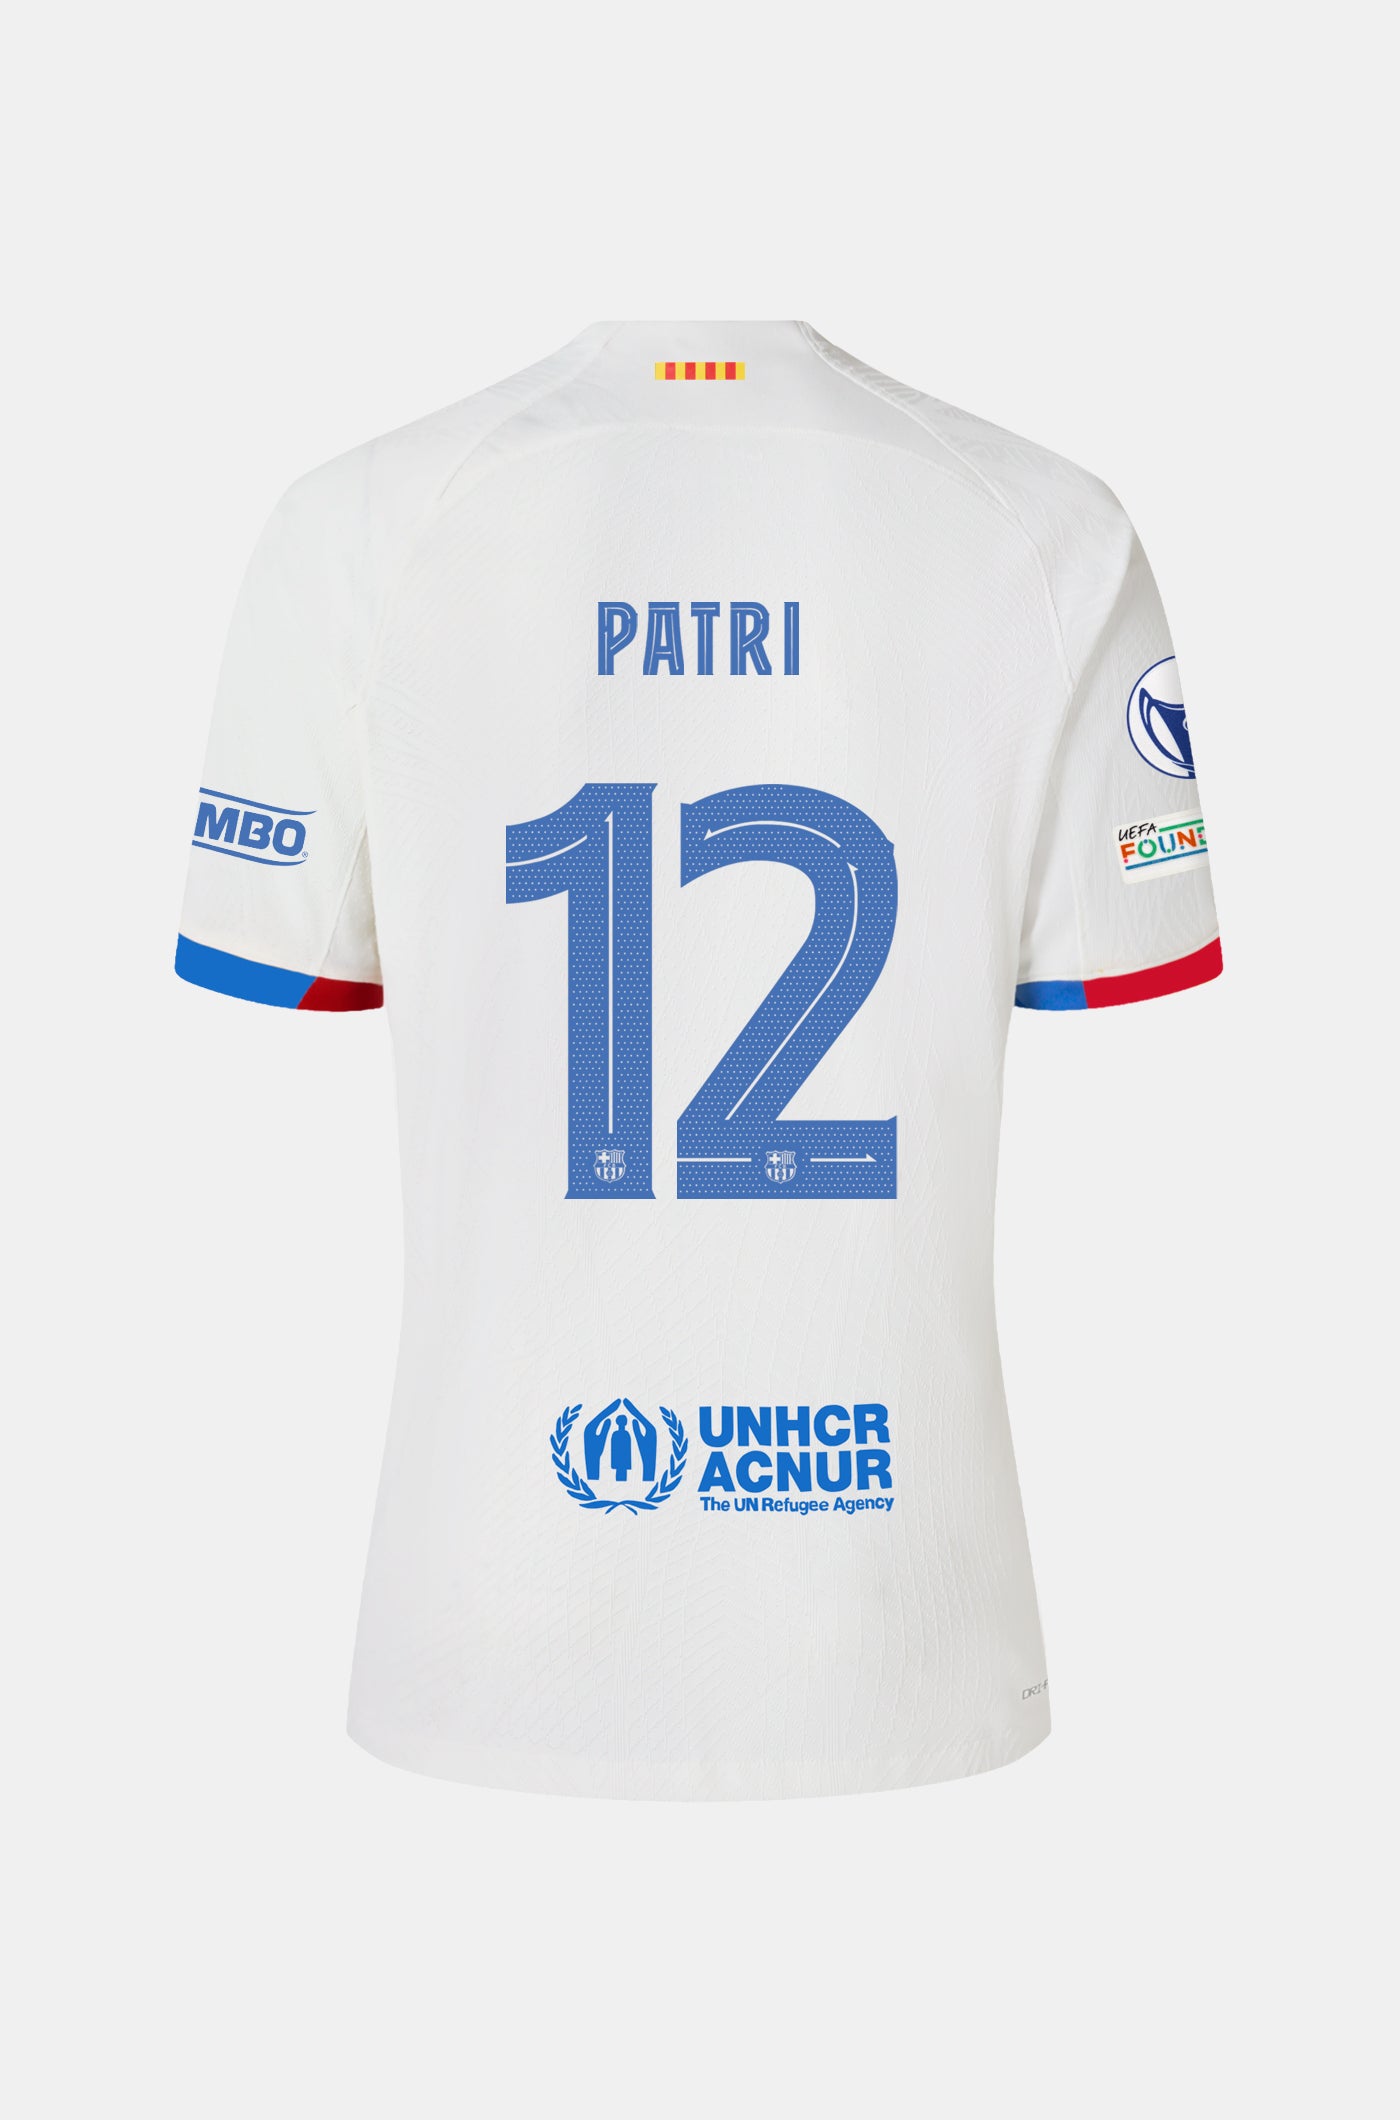 UWCL FC Barcelona away shirt 23/24 Player's Edition - PATRI